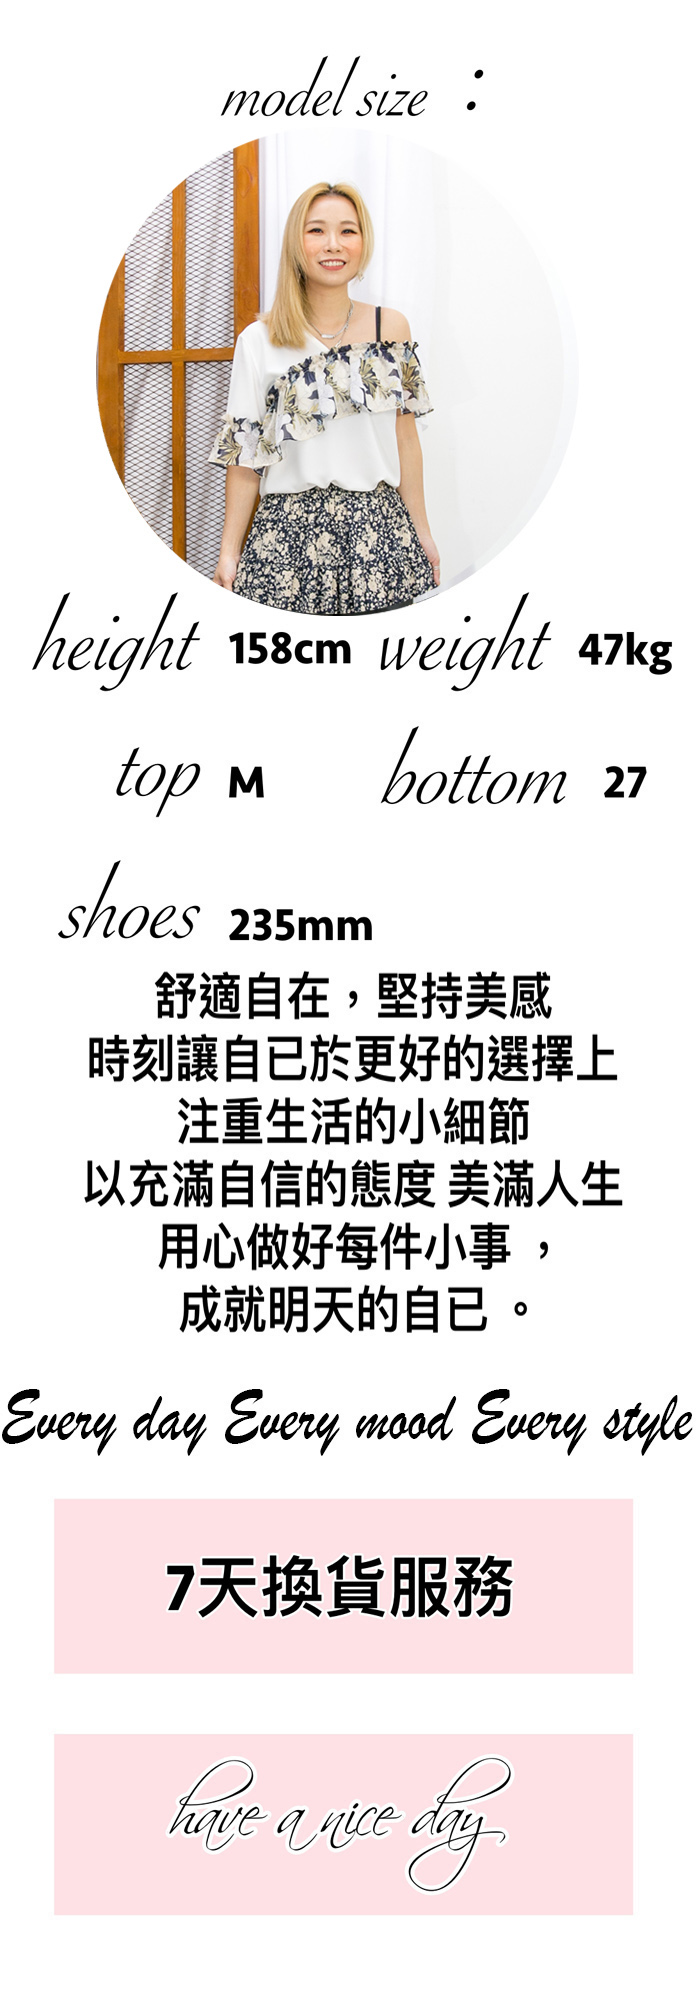 2115-1236A -黑色・型- SIZE M ~ 下擺爛爛 X 牛仔裙褲 (韓國)0